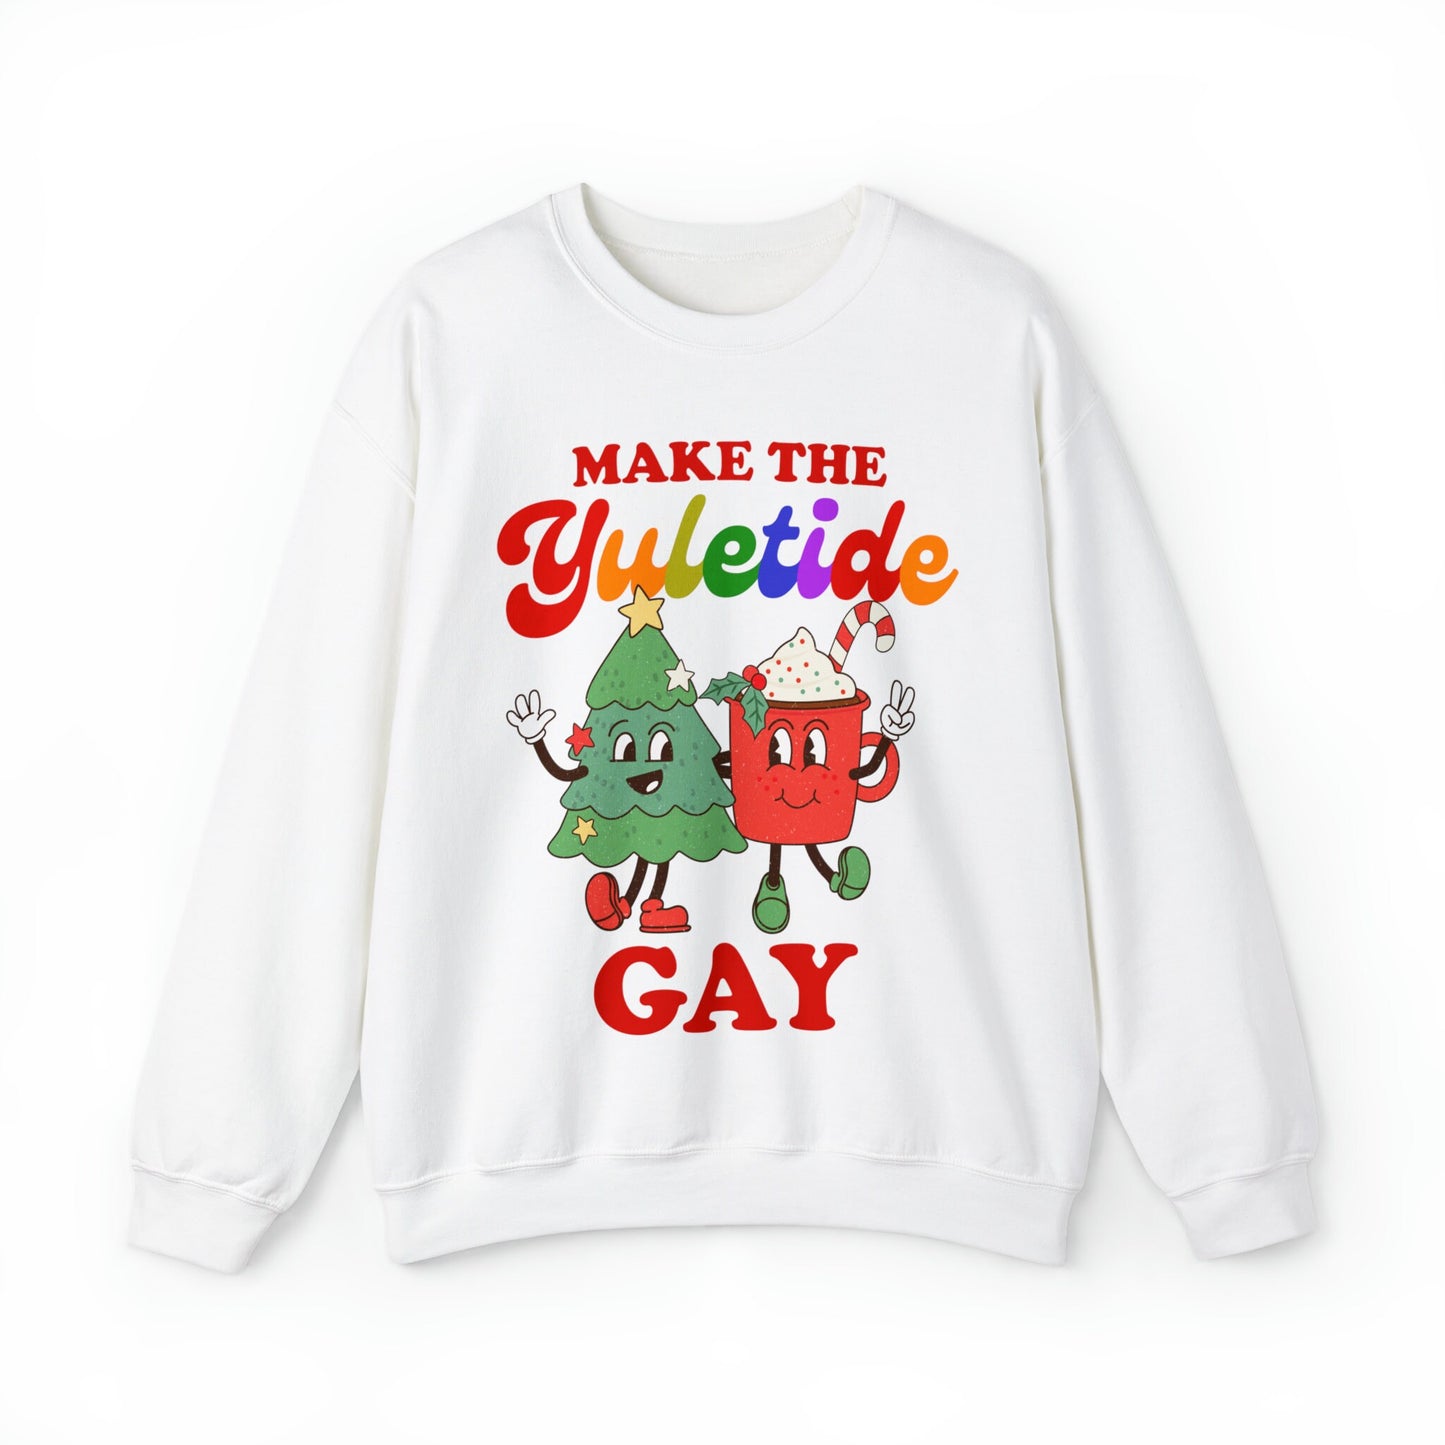 Make the yuletide gay sweatshirt